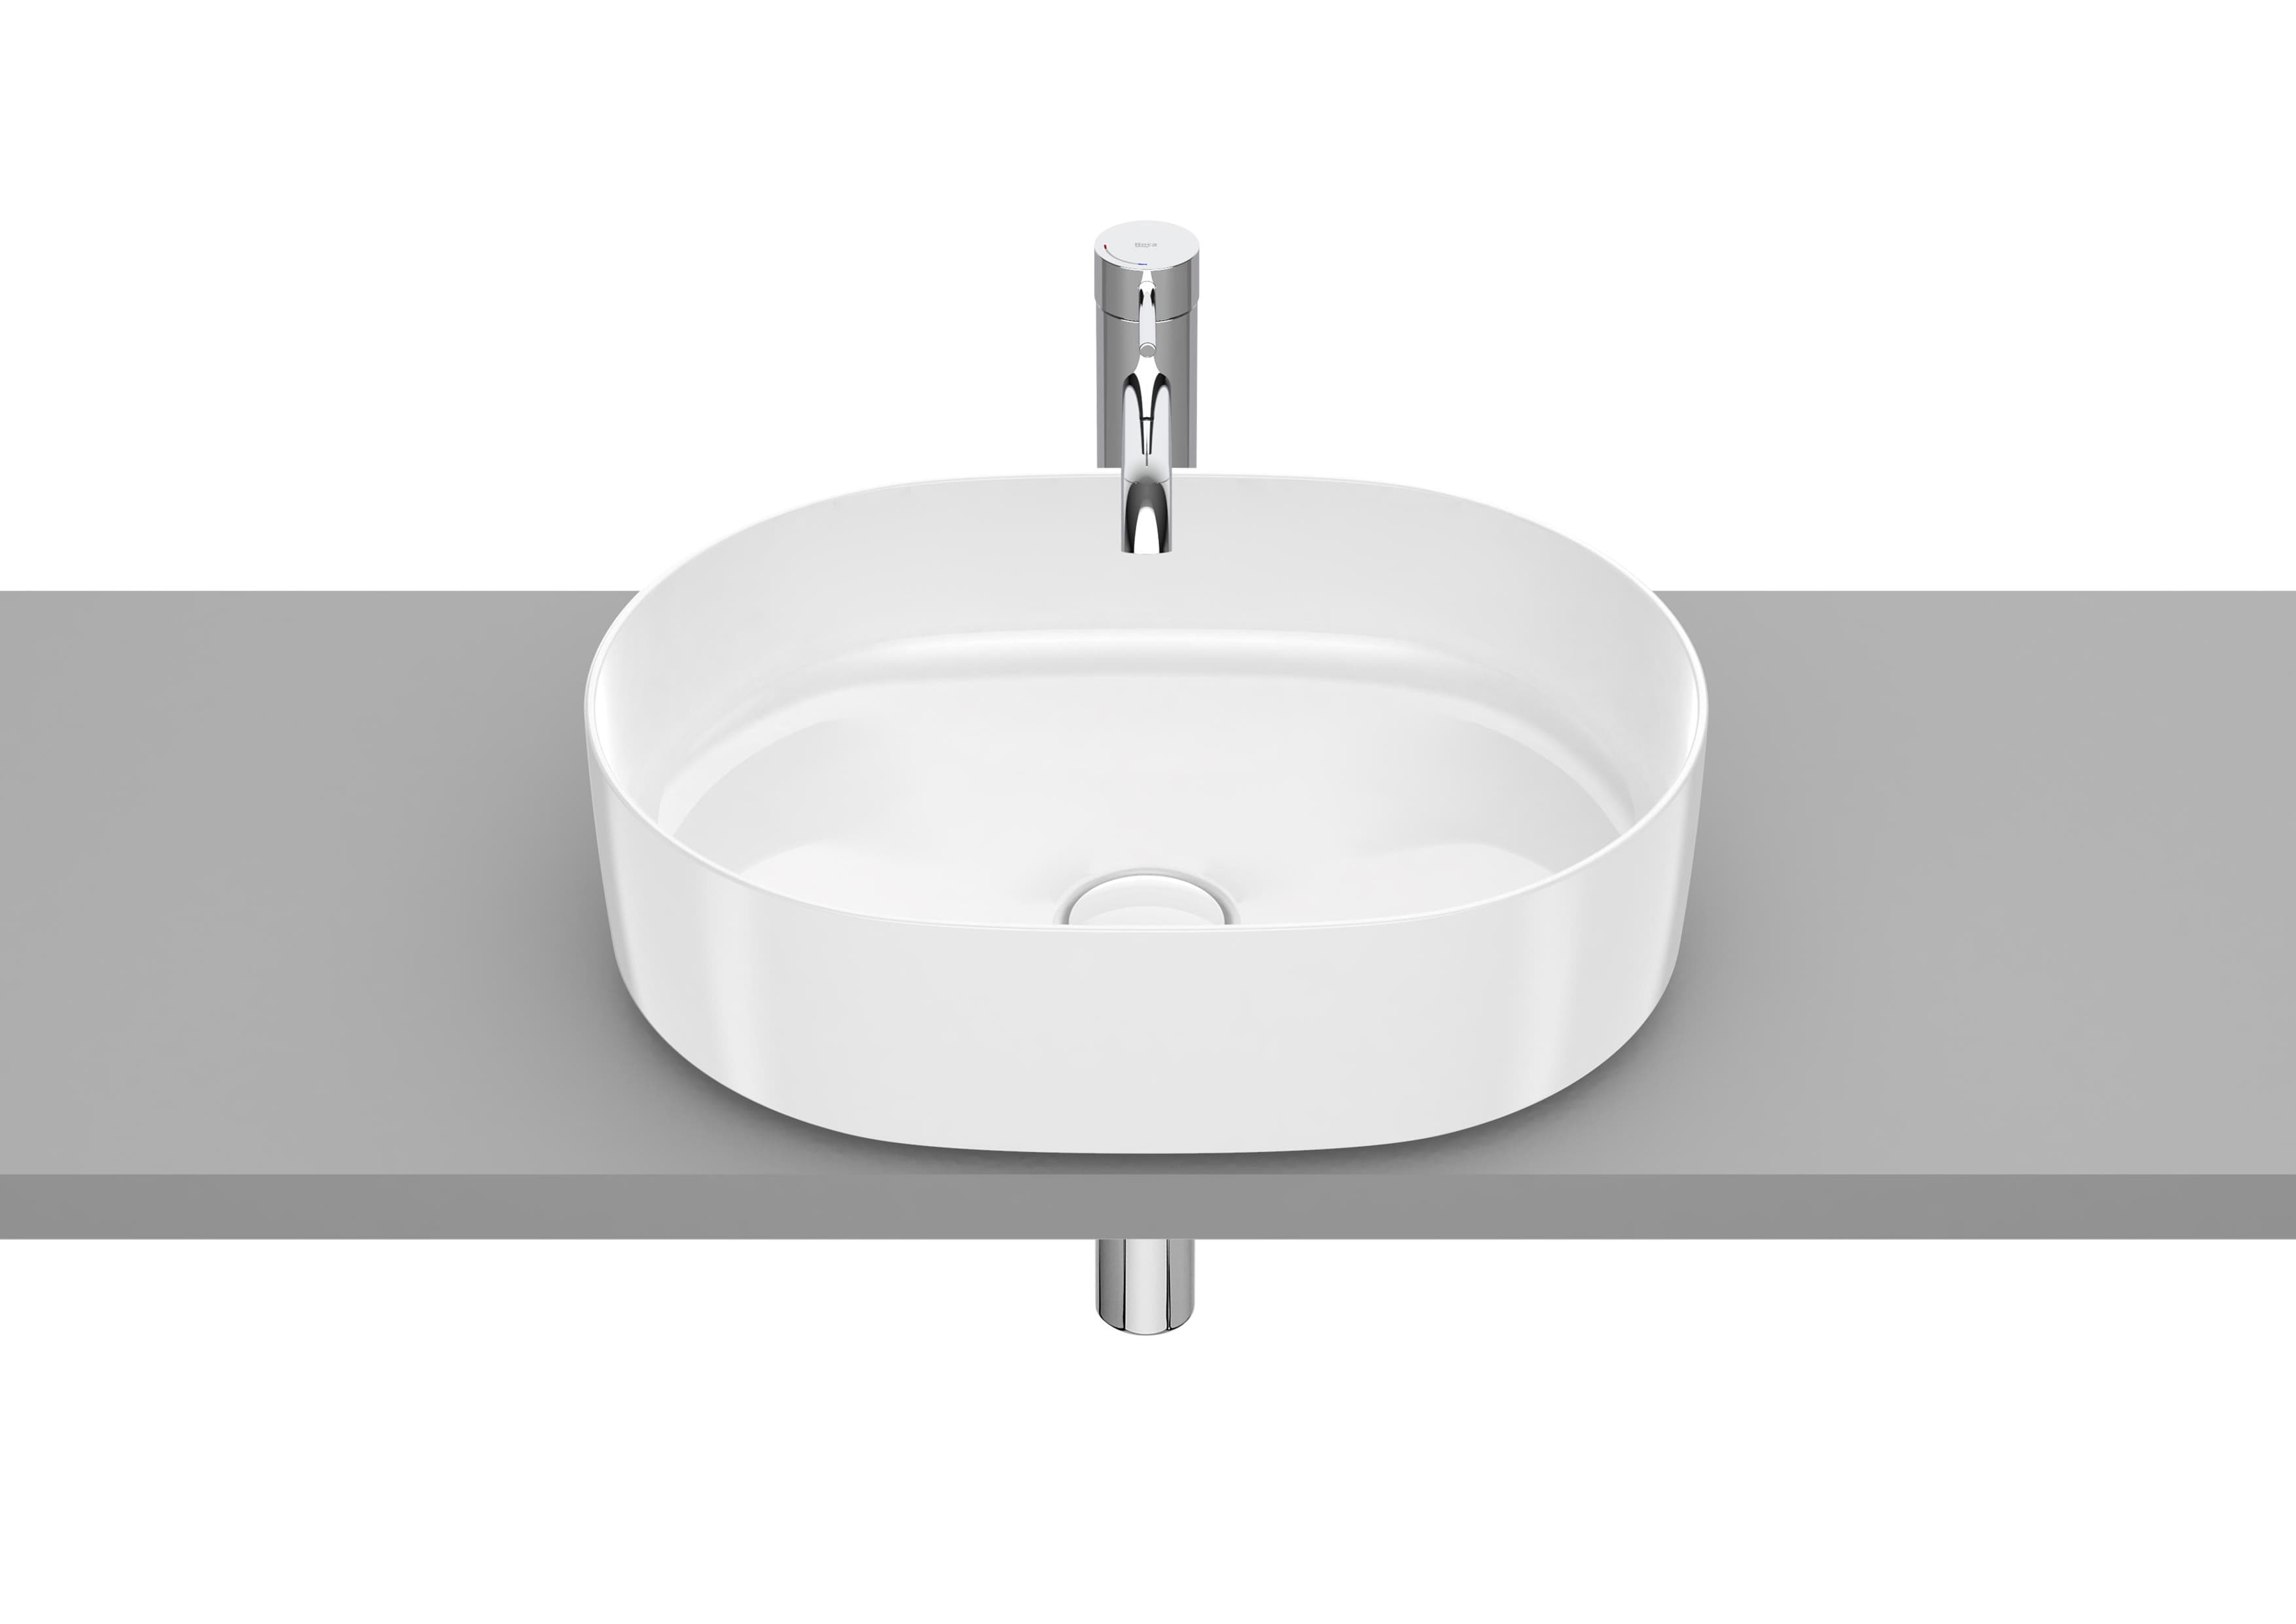 Sanitaire Lavabos INSPIRA A327520000 Vasque à poser rectangulaire Round en FINECERAMIC® Bonde de vidage céramique incluse. Sans trop-plein Roca 1 - Mirage ceramica